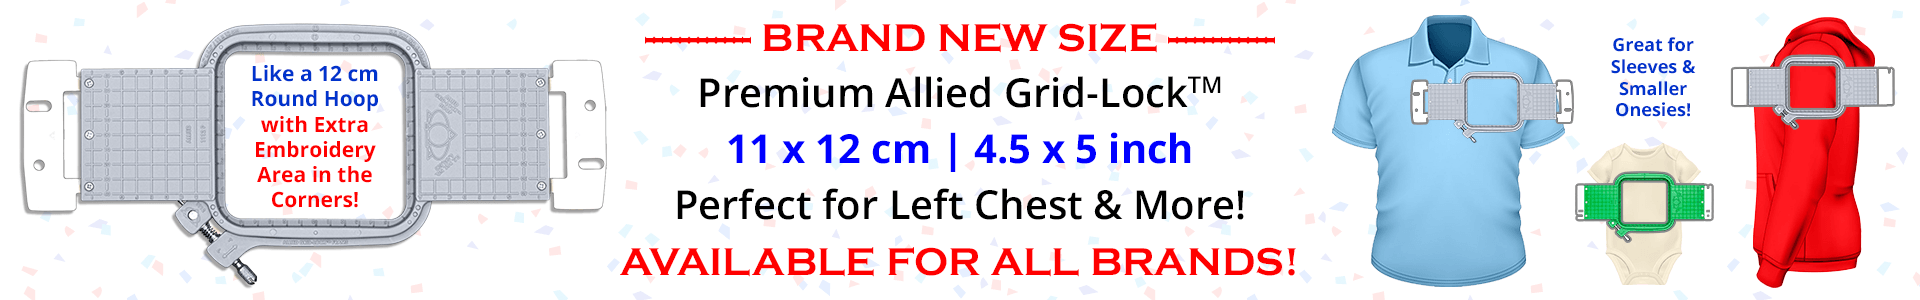 BRAND NEW Premium Allied Grid-Lock 11 x 12 cm (4.5 x 5 inch) Hoops!